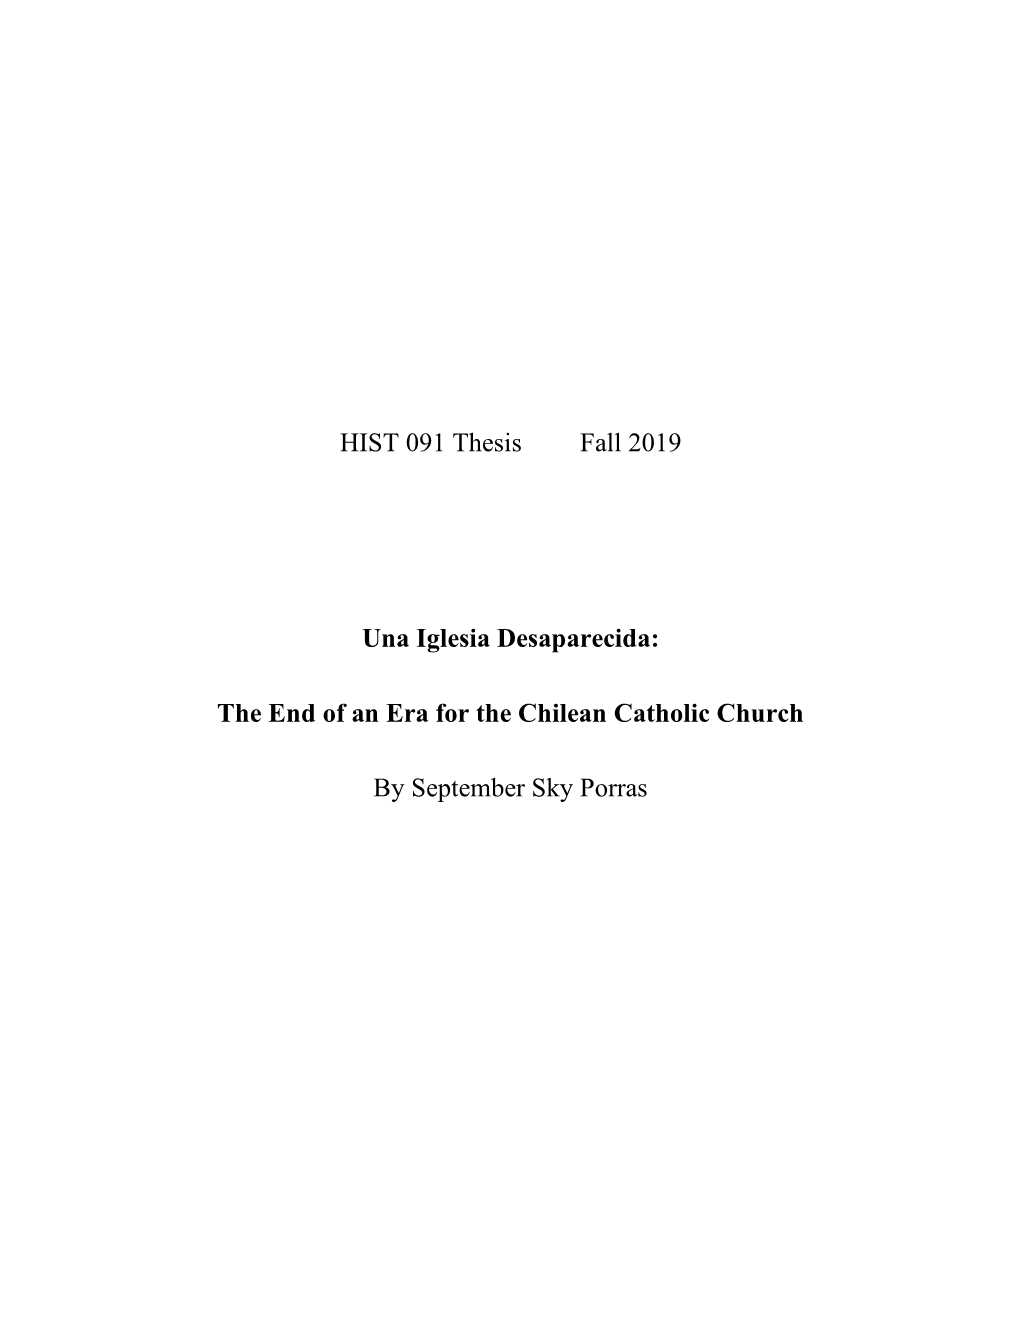 HIST 091 Thesis Fall 2019 Una Iglesia Desaparecida: the End of an Era